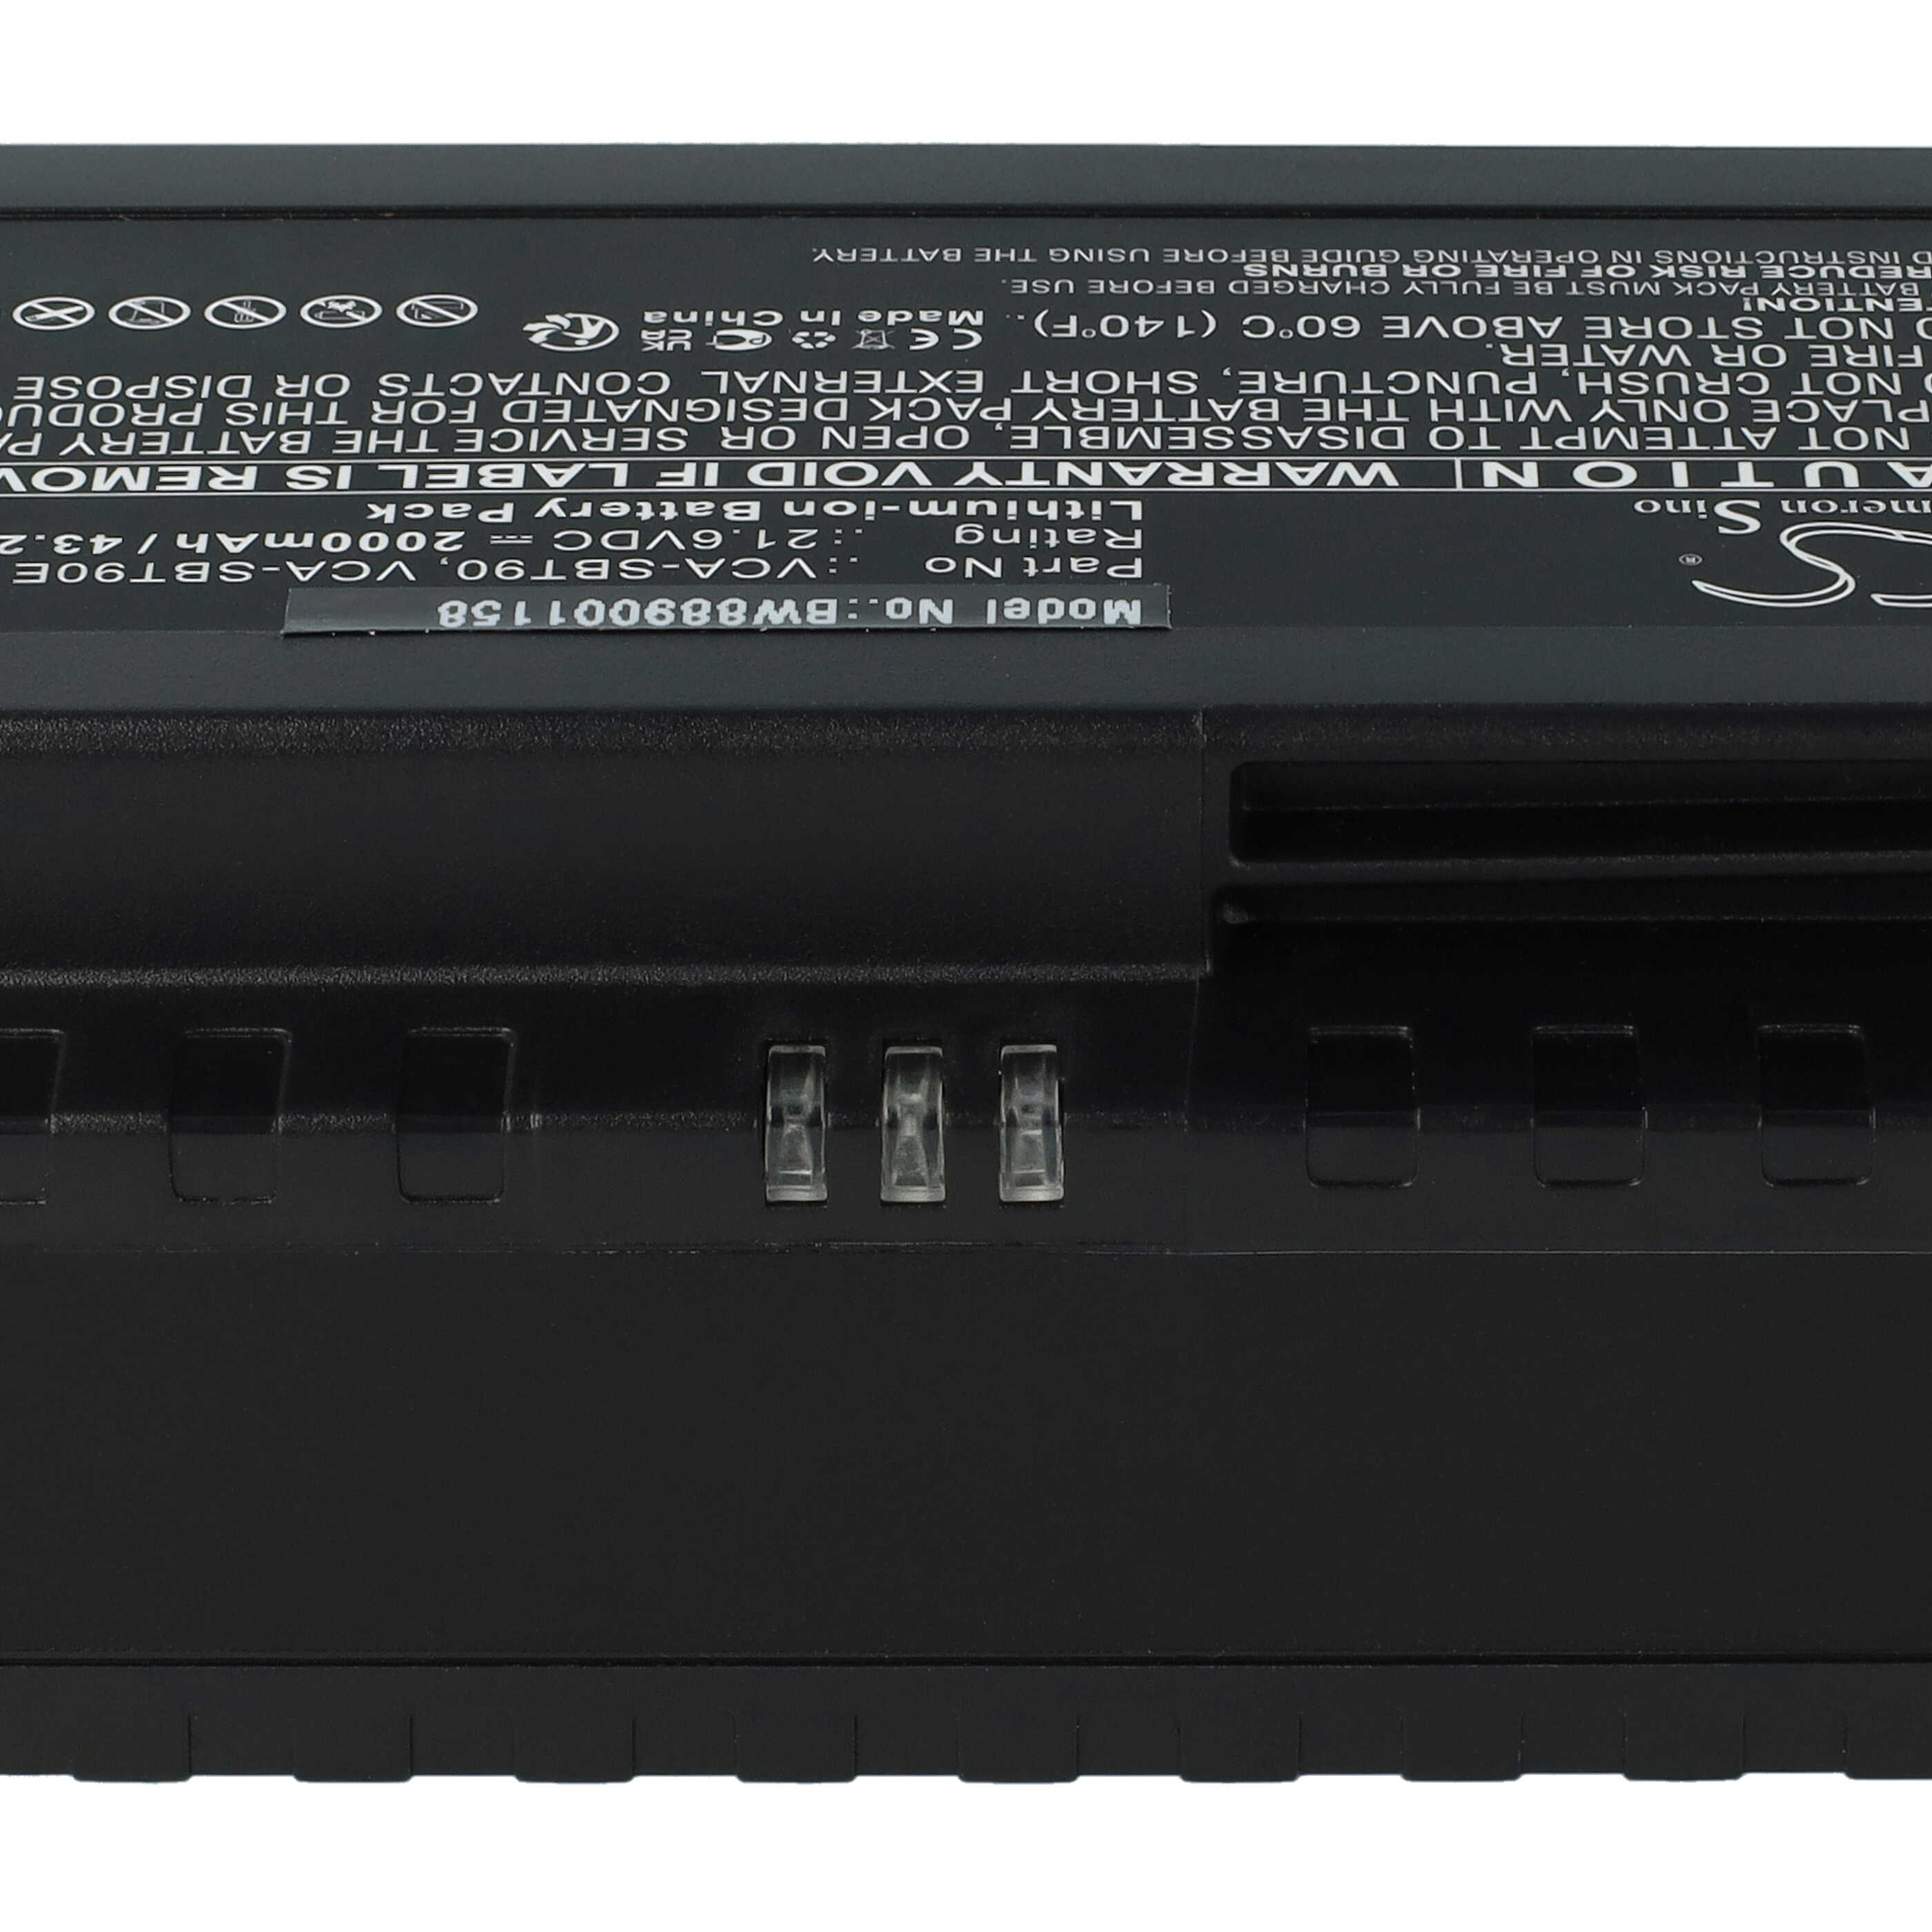 Akku als Ersatz für Samsung VCA-SBT90E, VCA-SBT90, DJ96-00221A für Samsung - 2000mAh 21,6V Li-Ion, schwarz